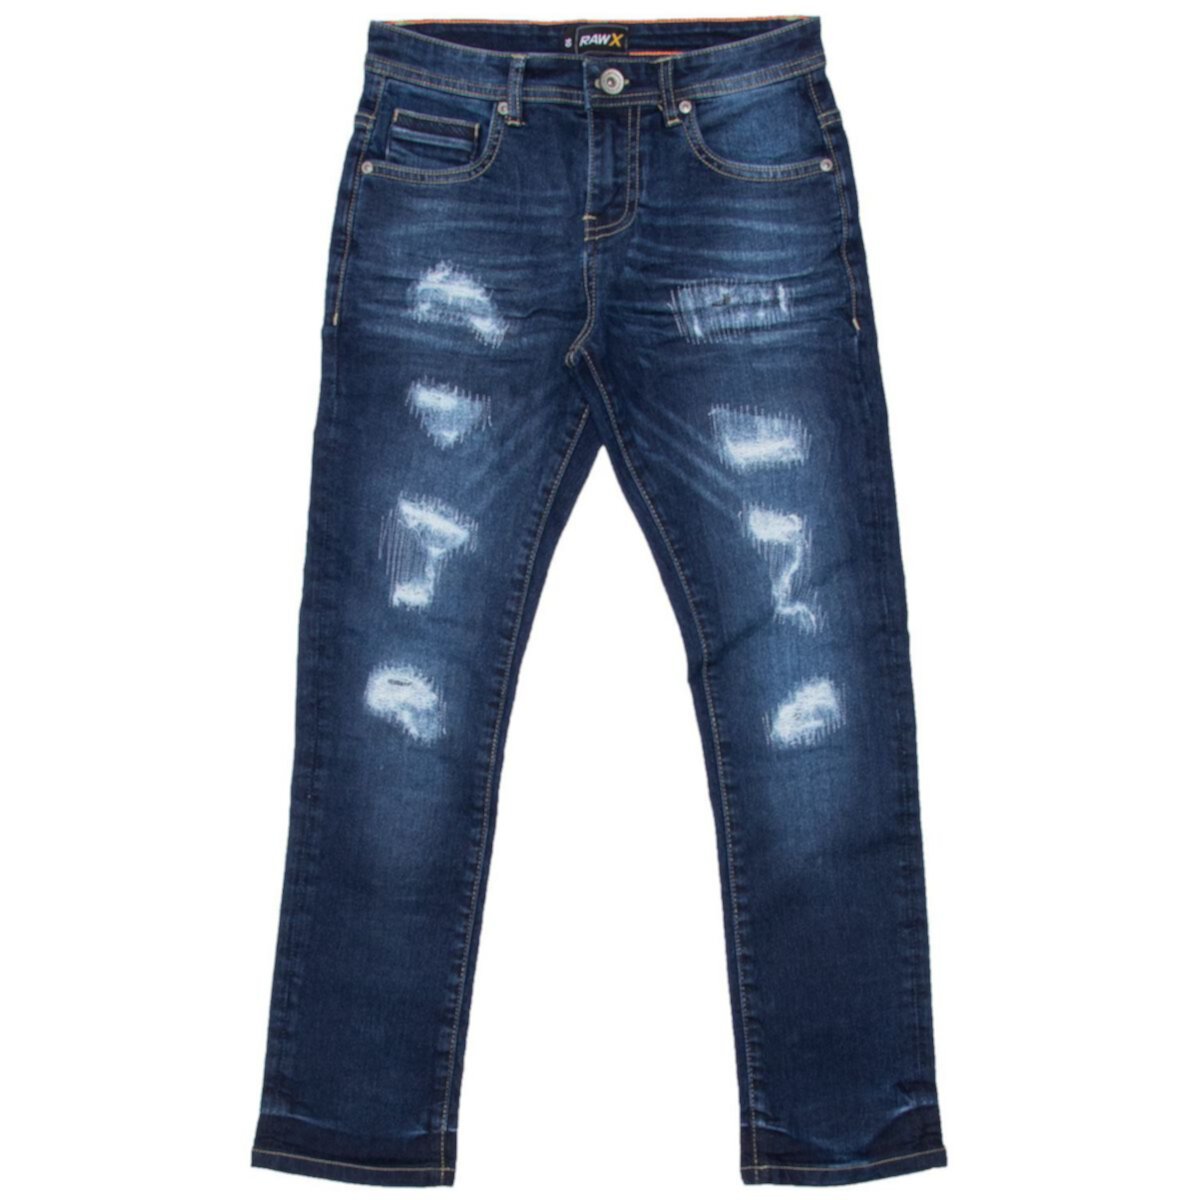 Boys 4-7 Fashion Rip & Repair Jeans With Stretch RawX